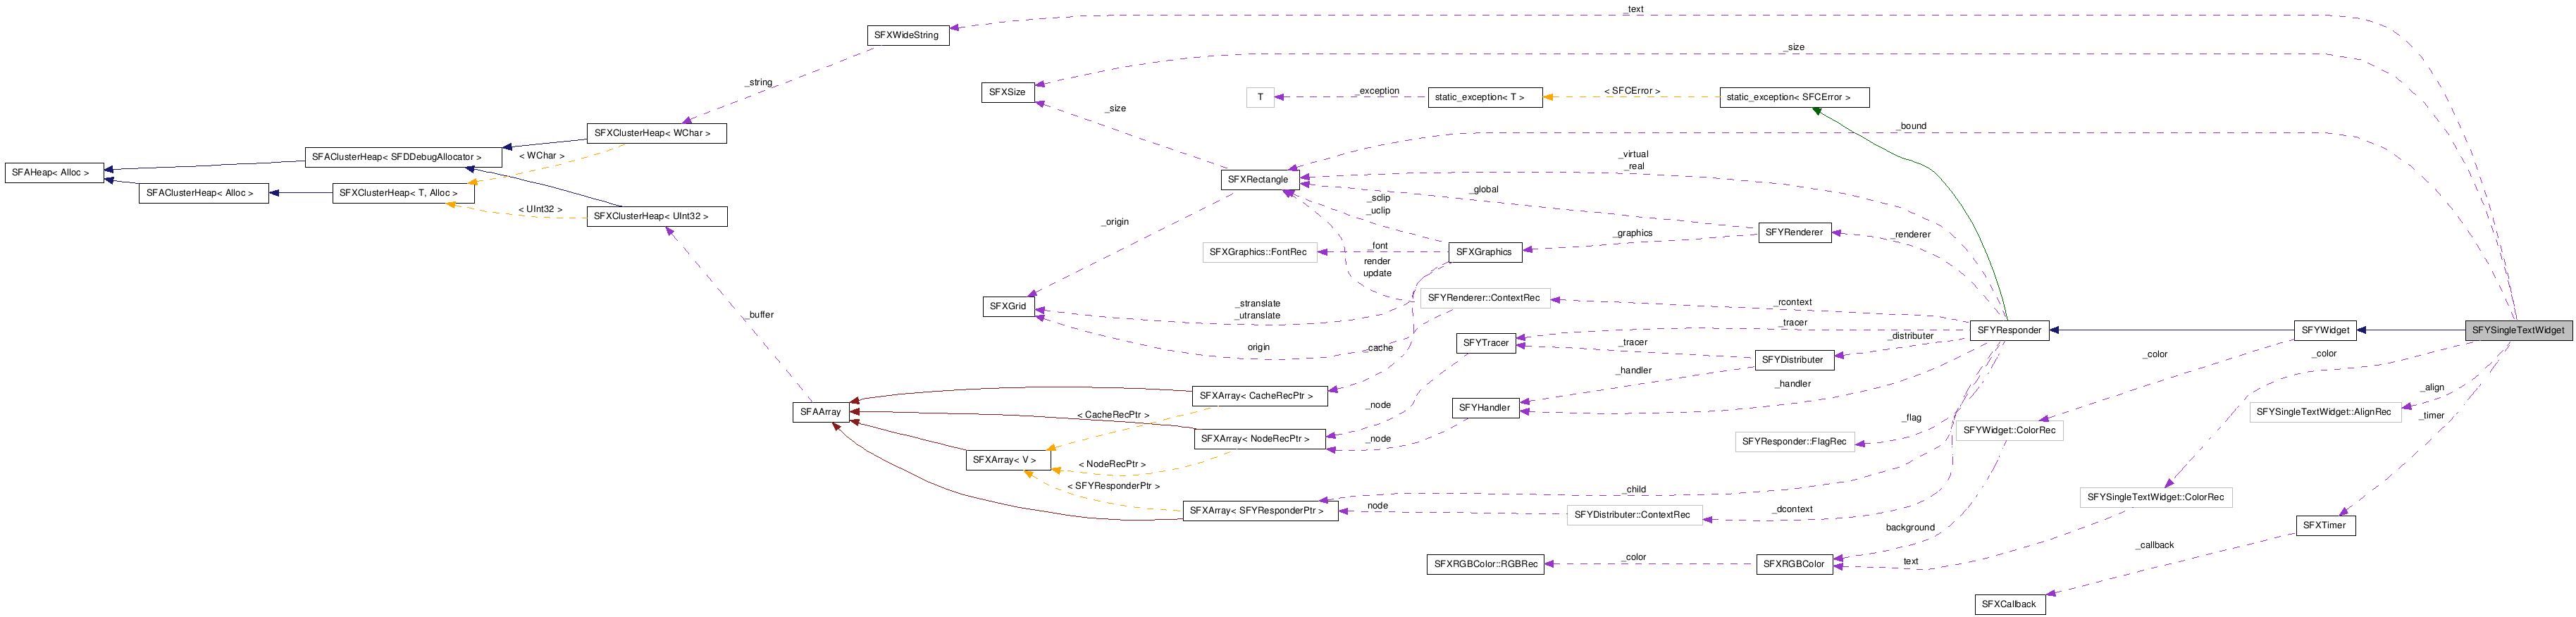  Collaboration diagram of SFYSingleTextWidgetClass